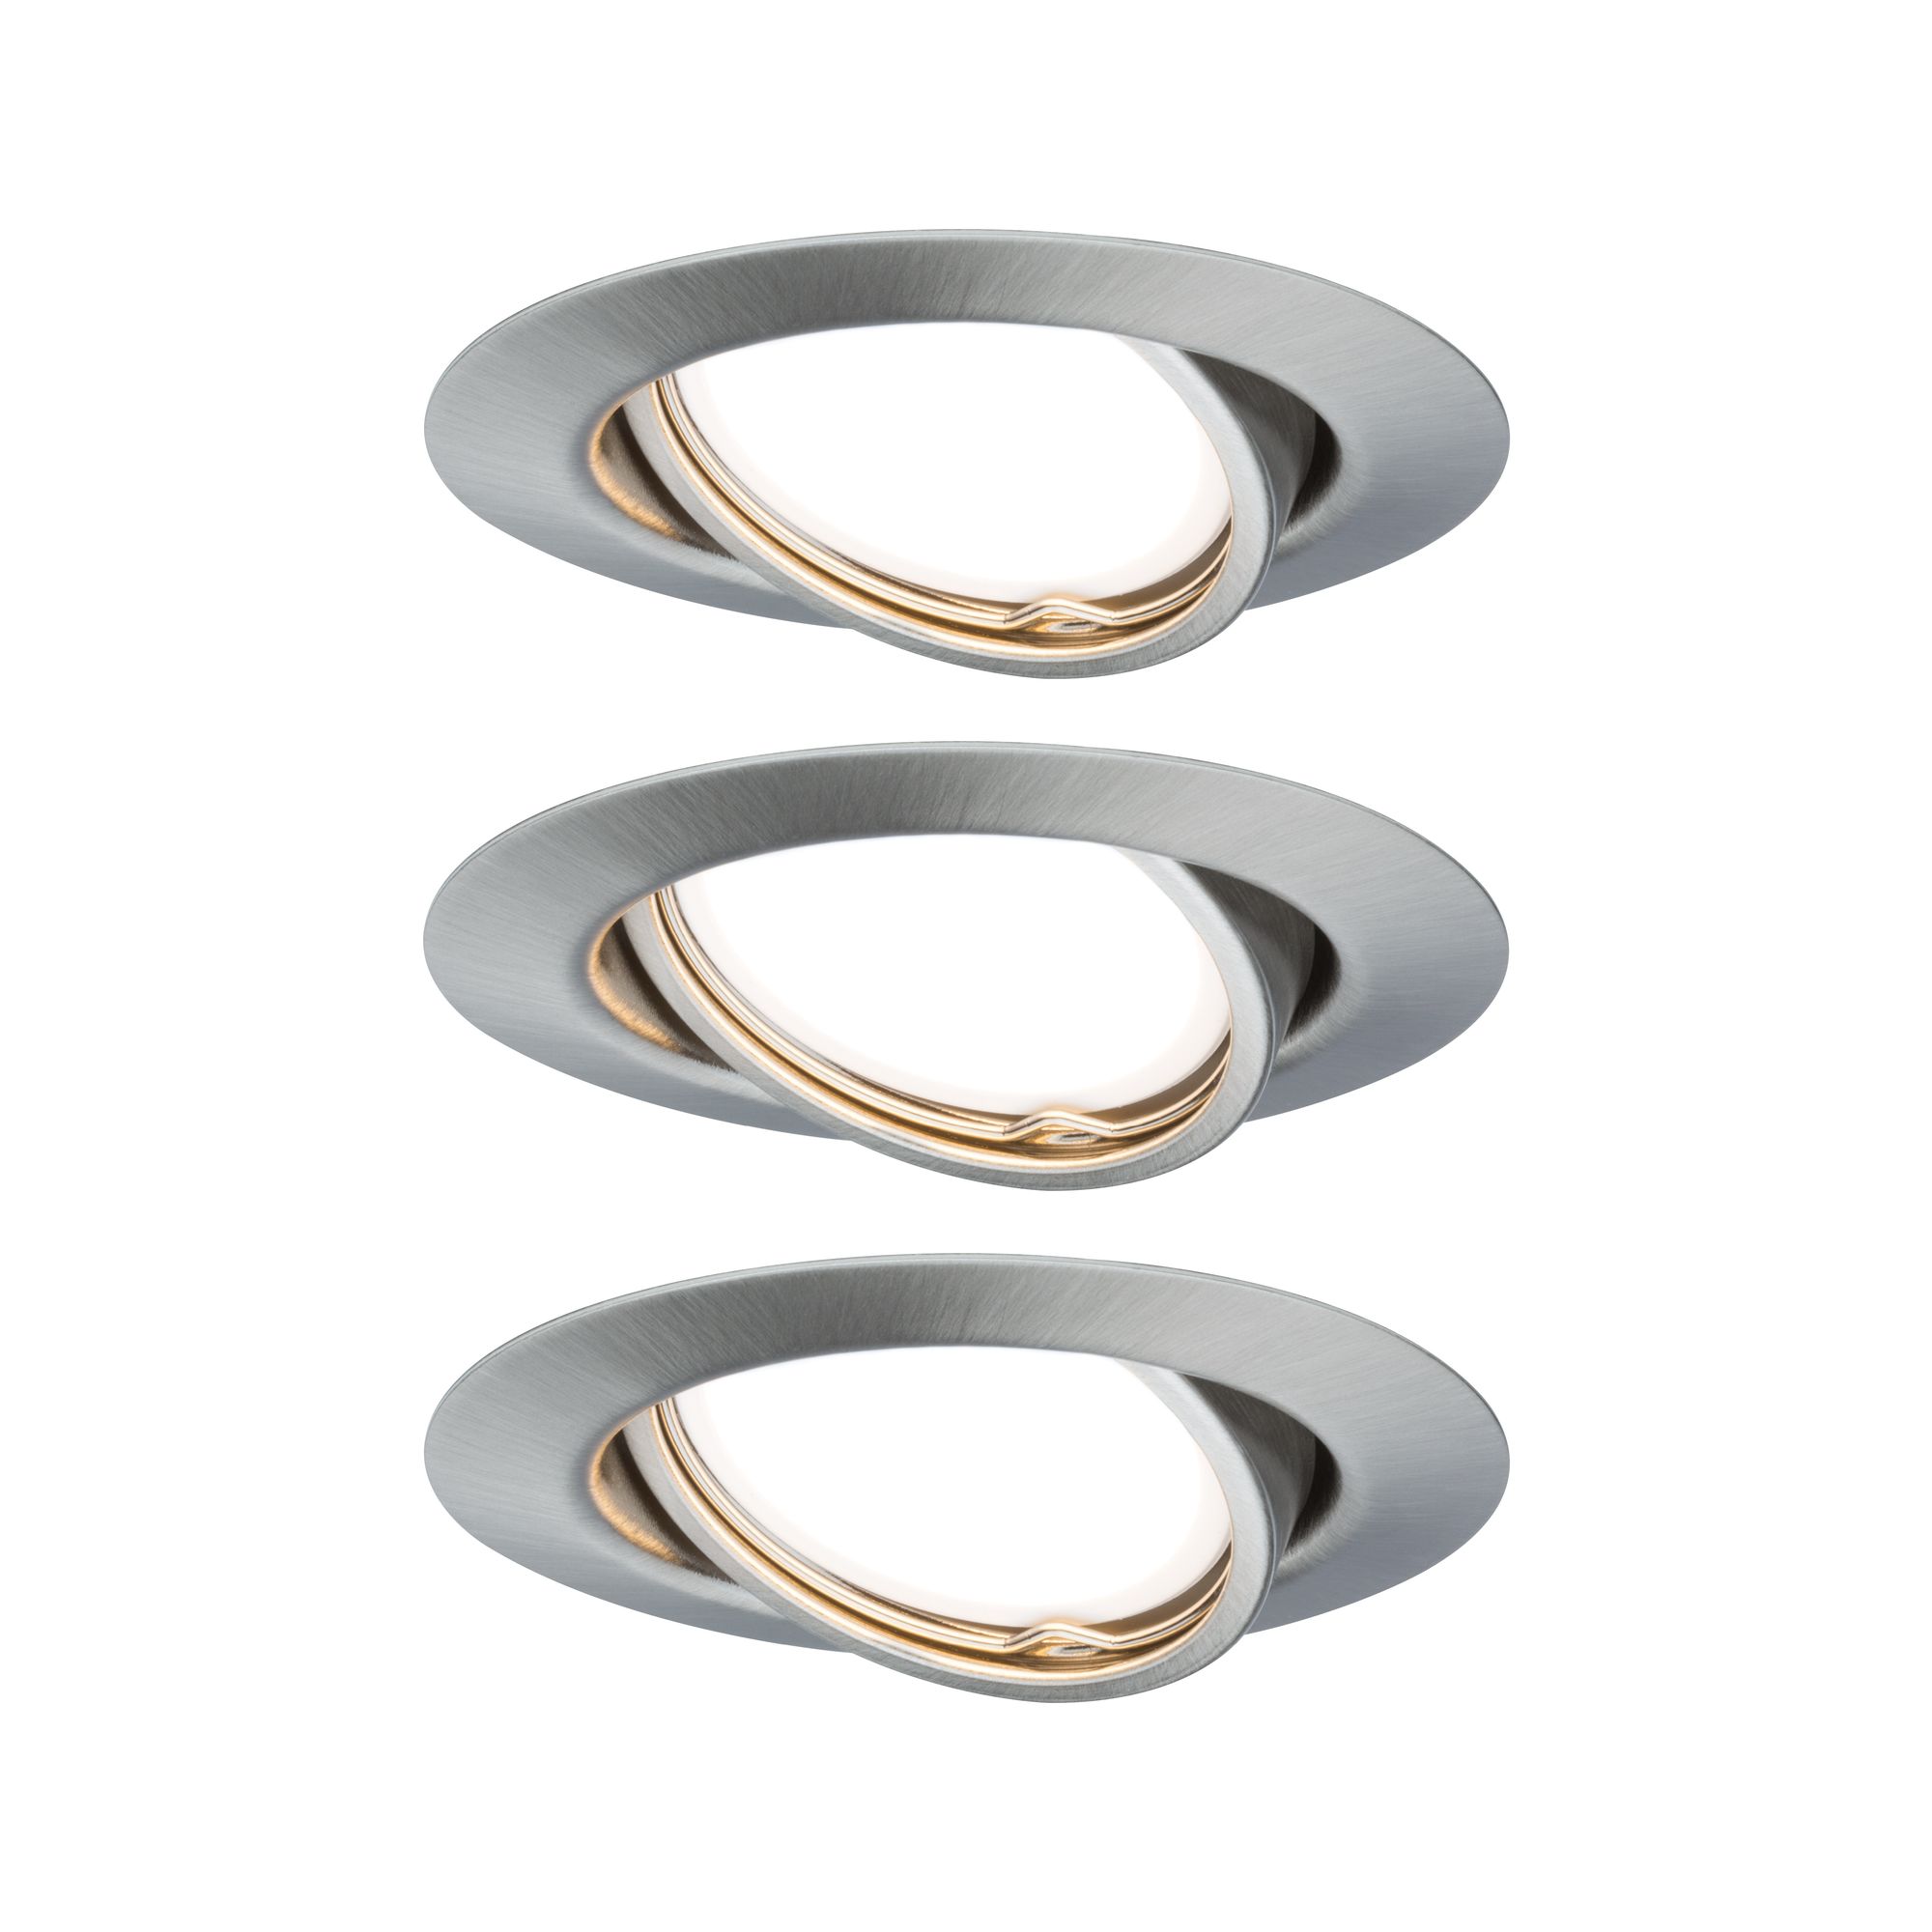 PAULMANN - Vestavné svítidlo LED Base kruhové 3x5W GU10 kov kartáčovaný stmívatelné, P 93424